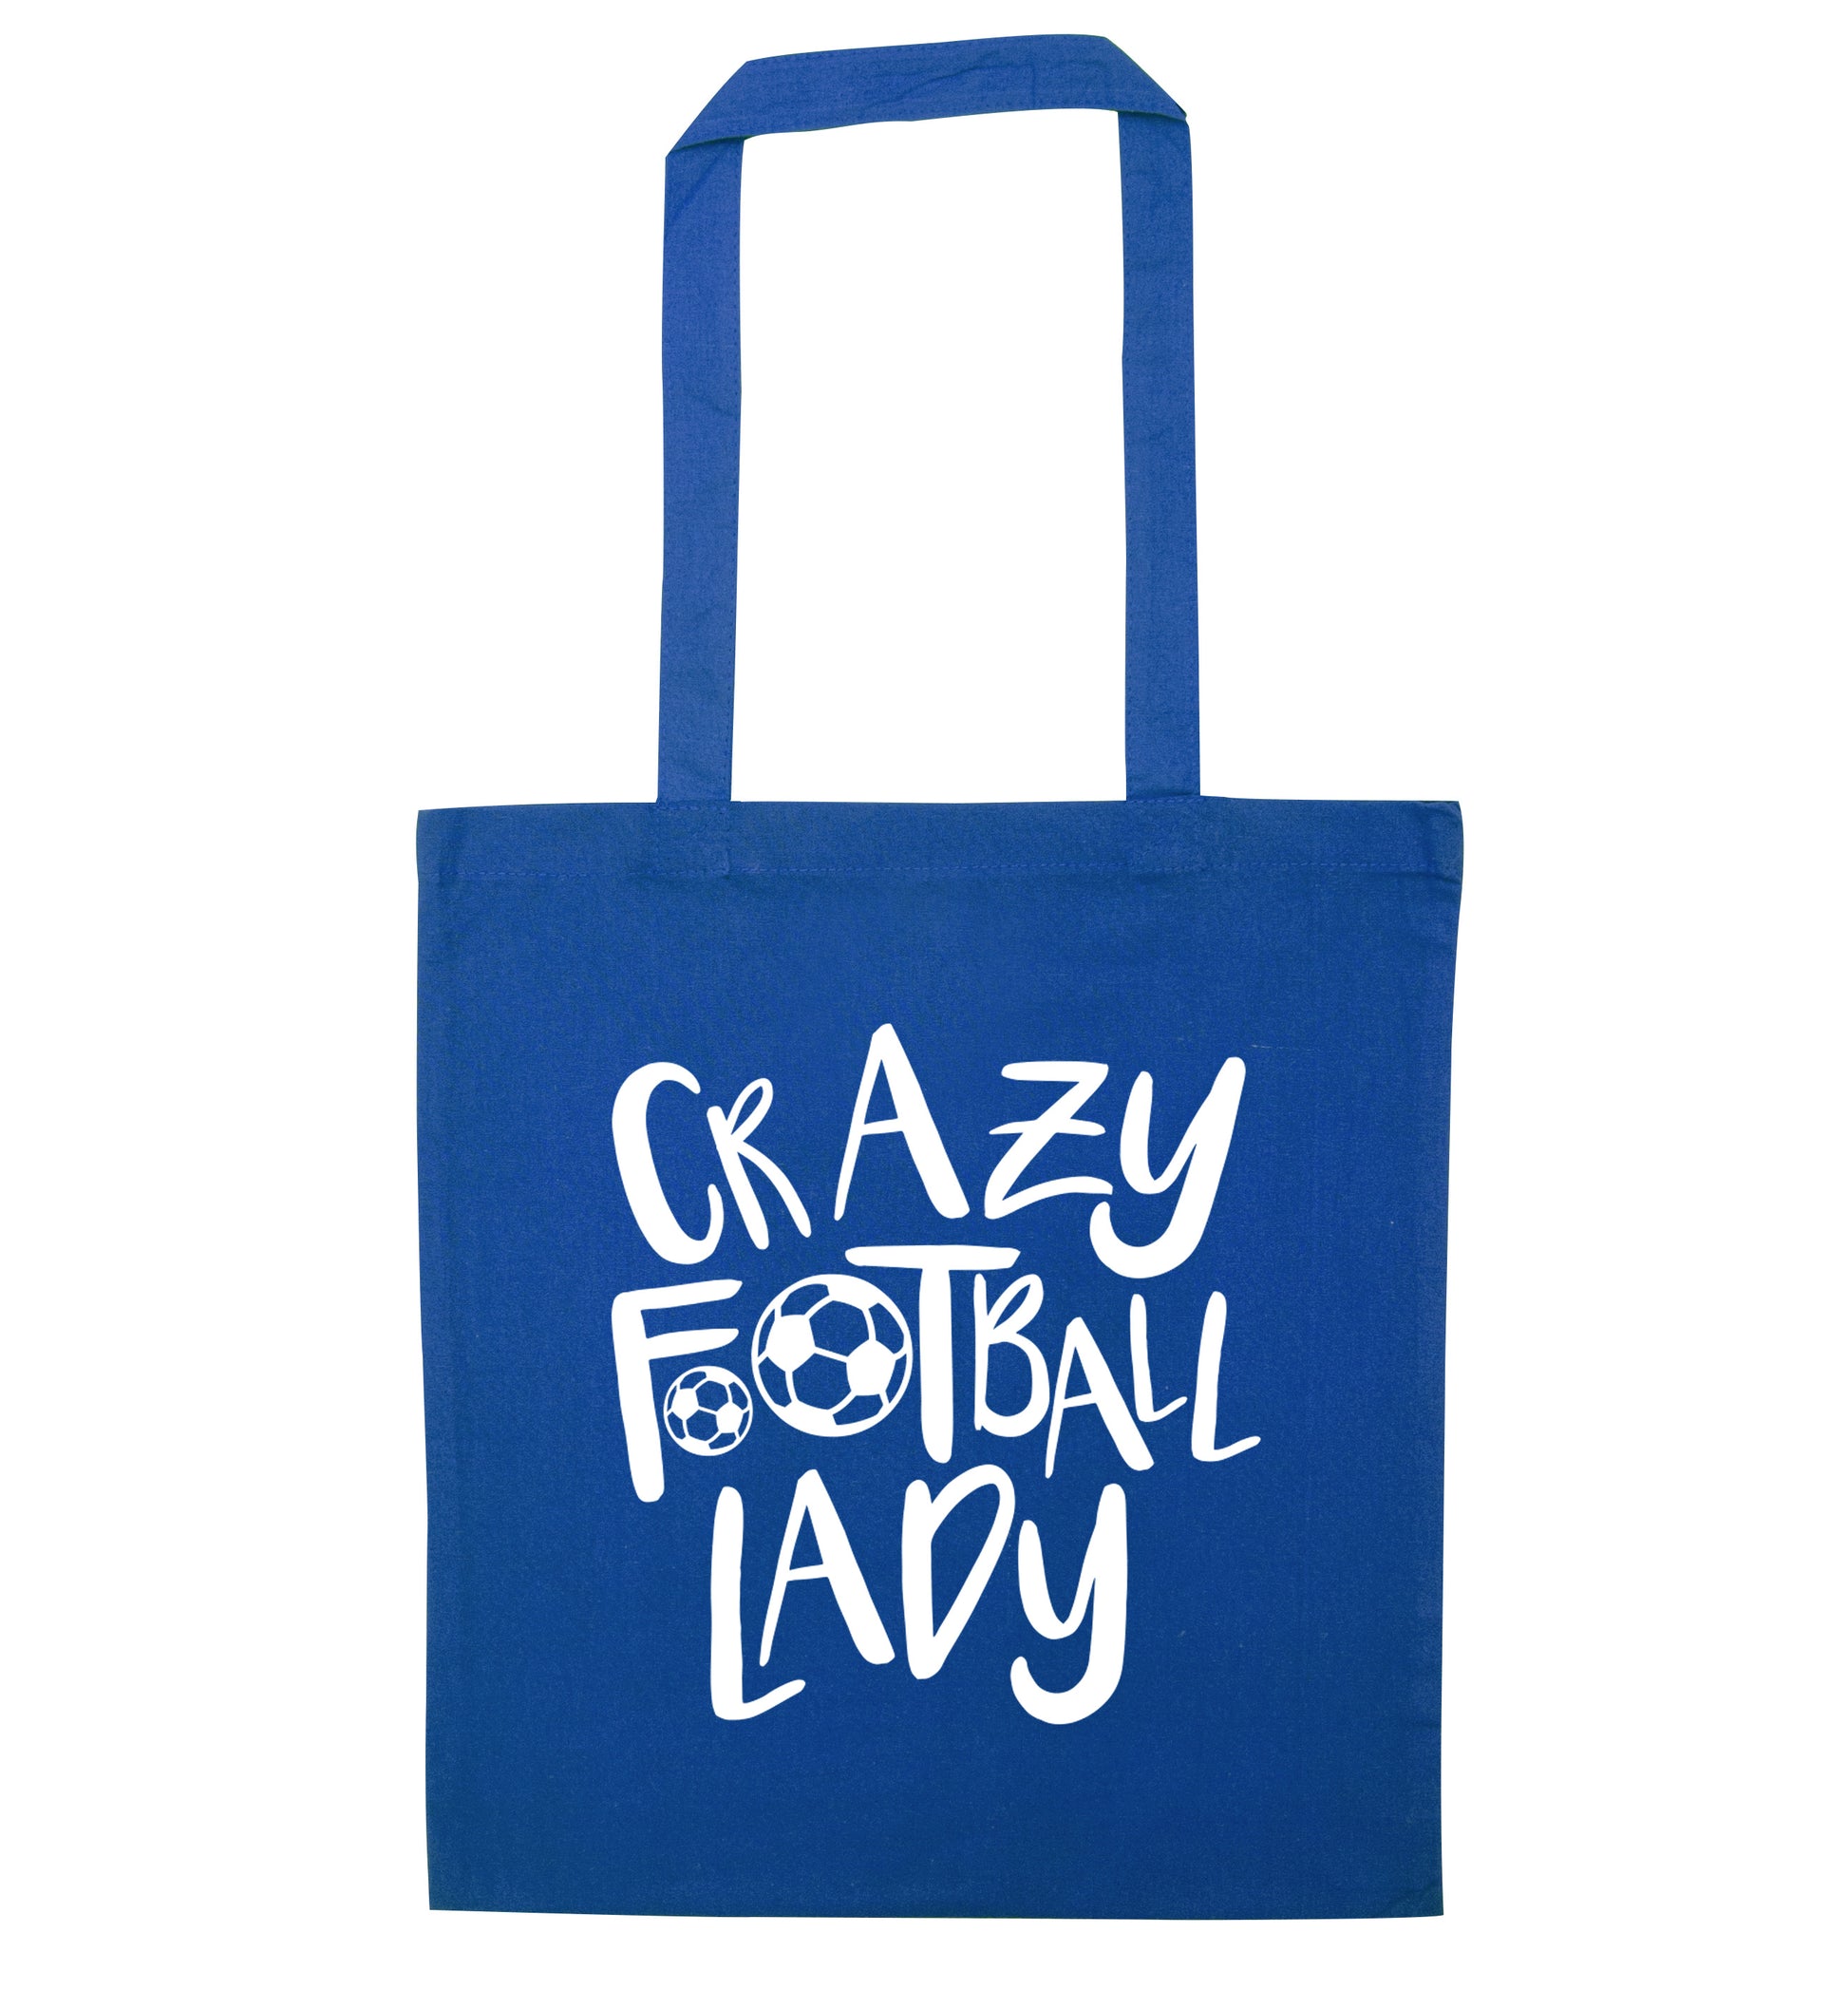 Crazy football lady blue tote bag